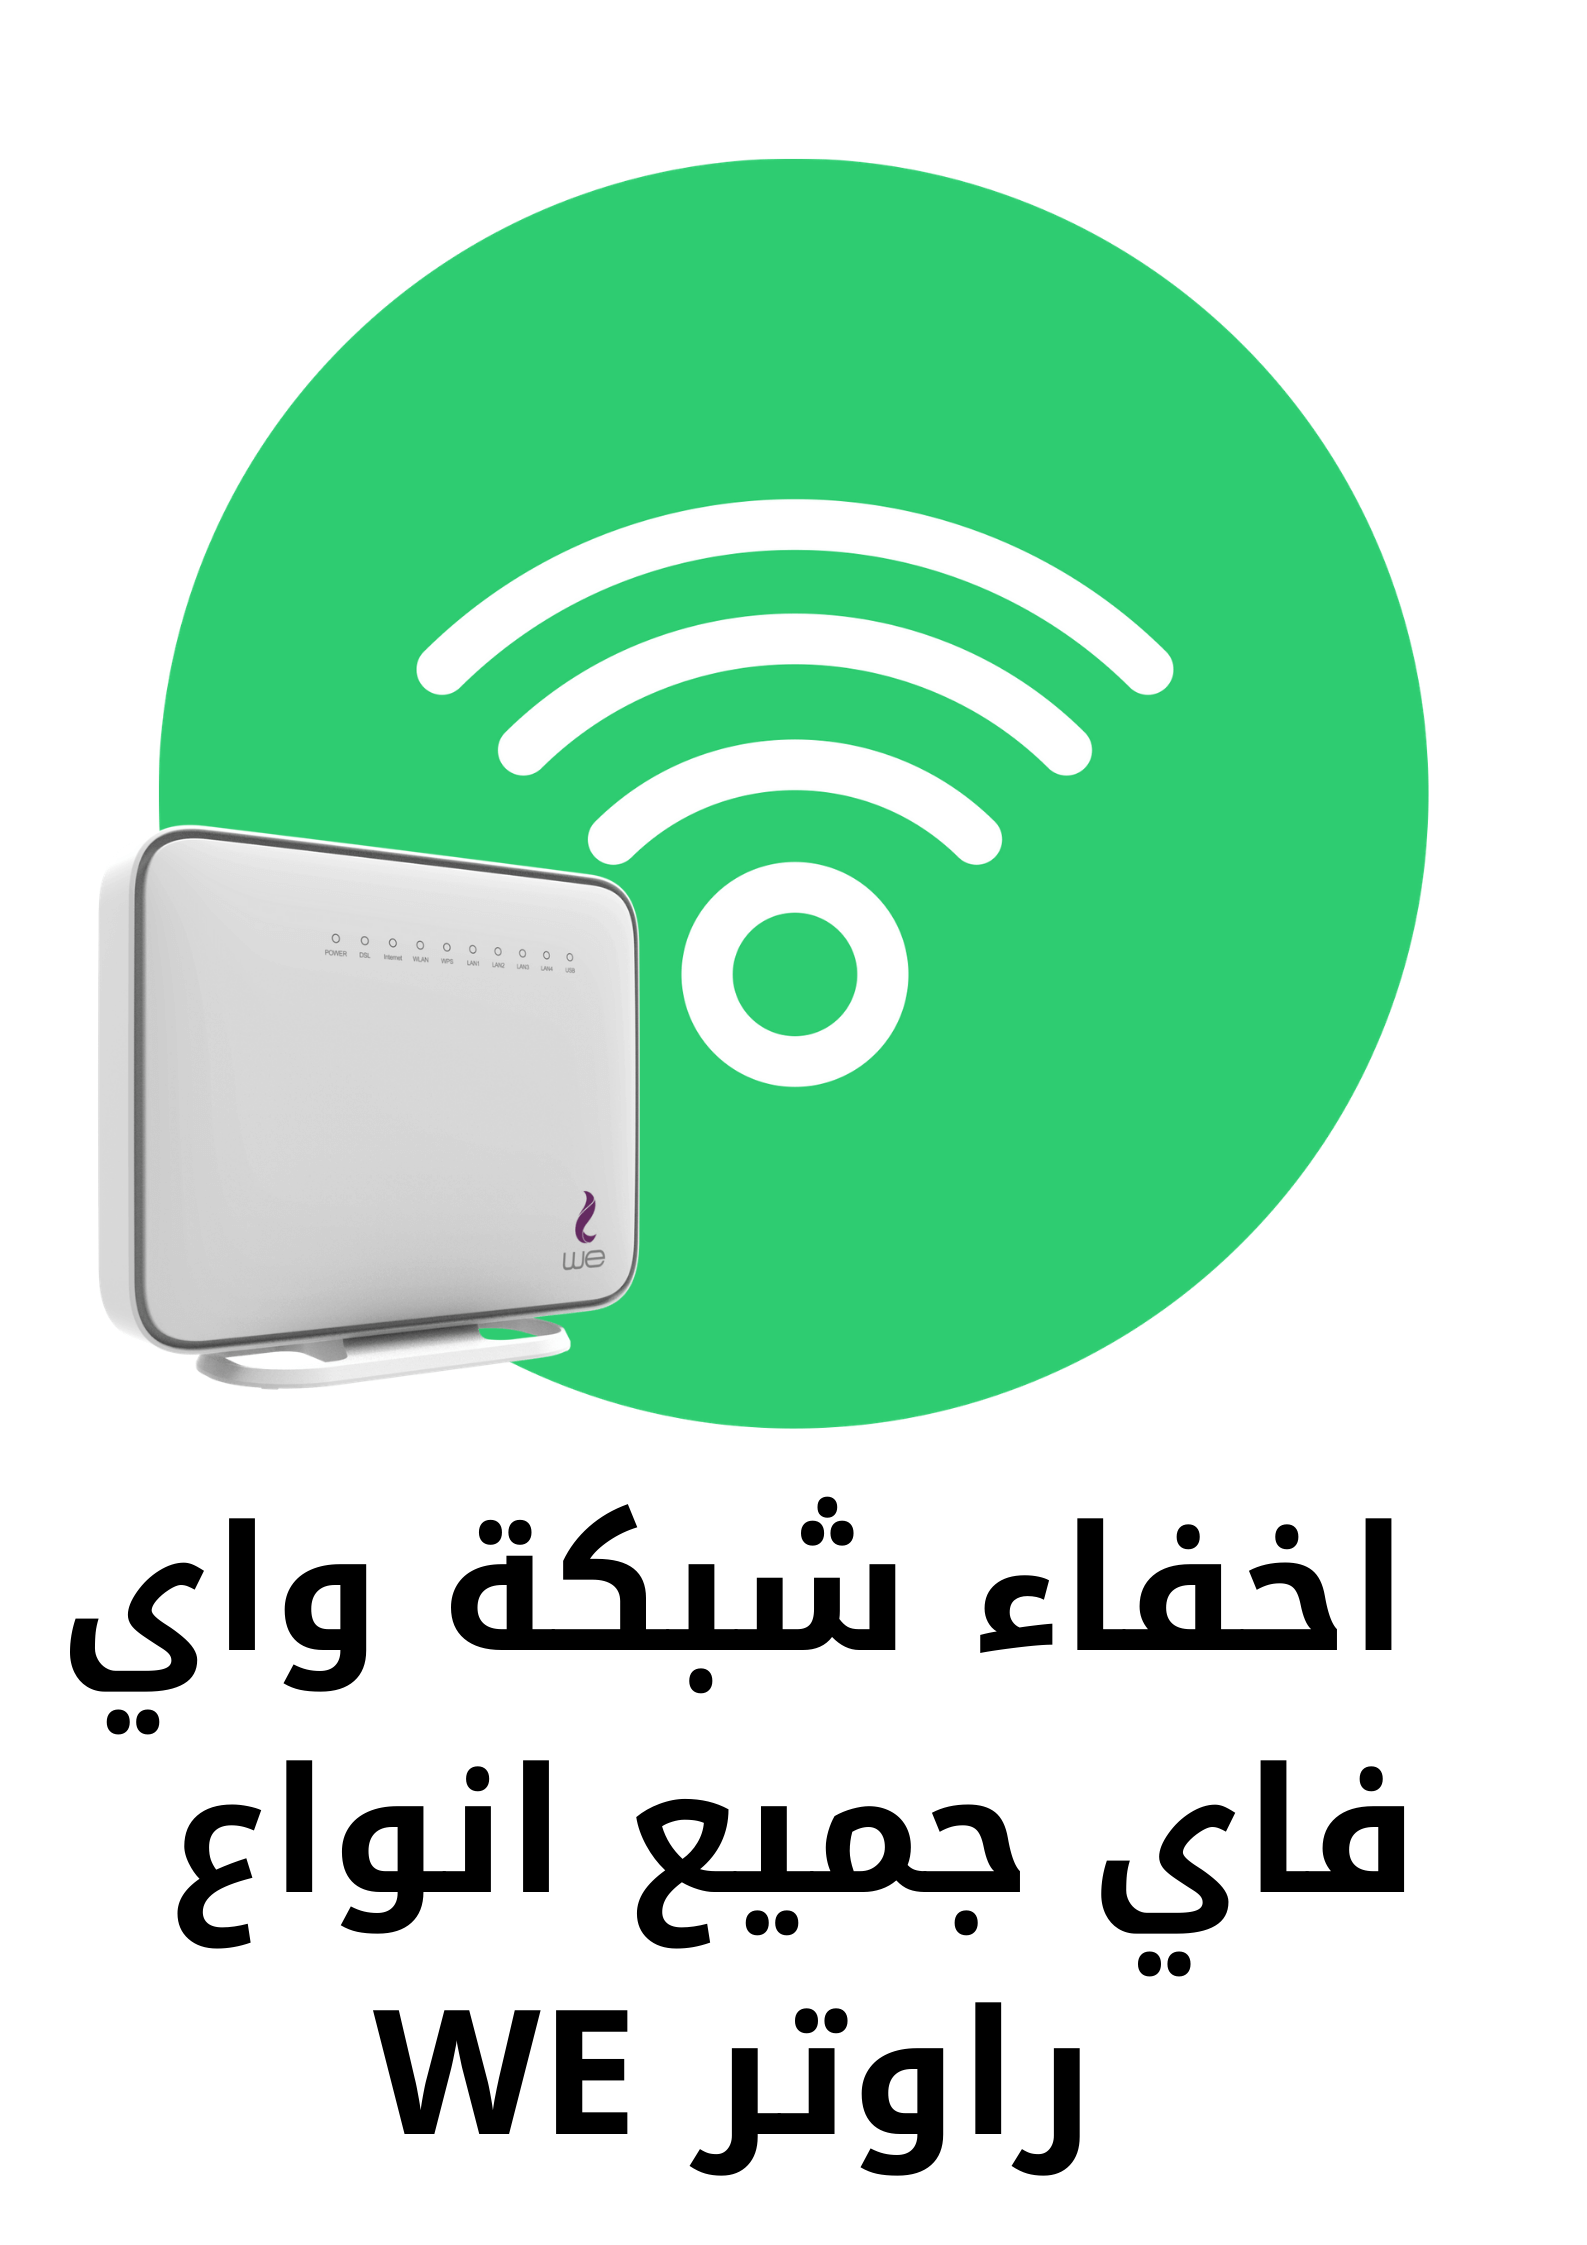 Скрыть Wi-Fi Маршрутизатор Wi-Fi